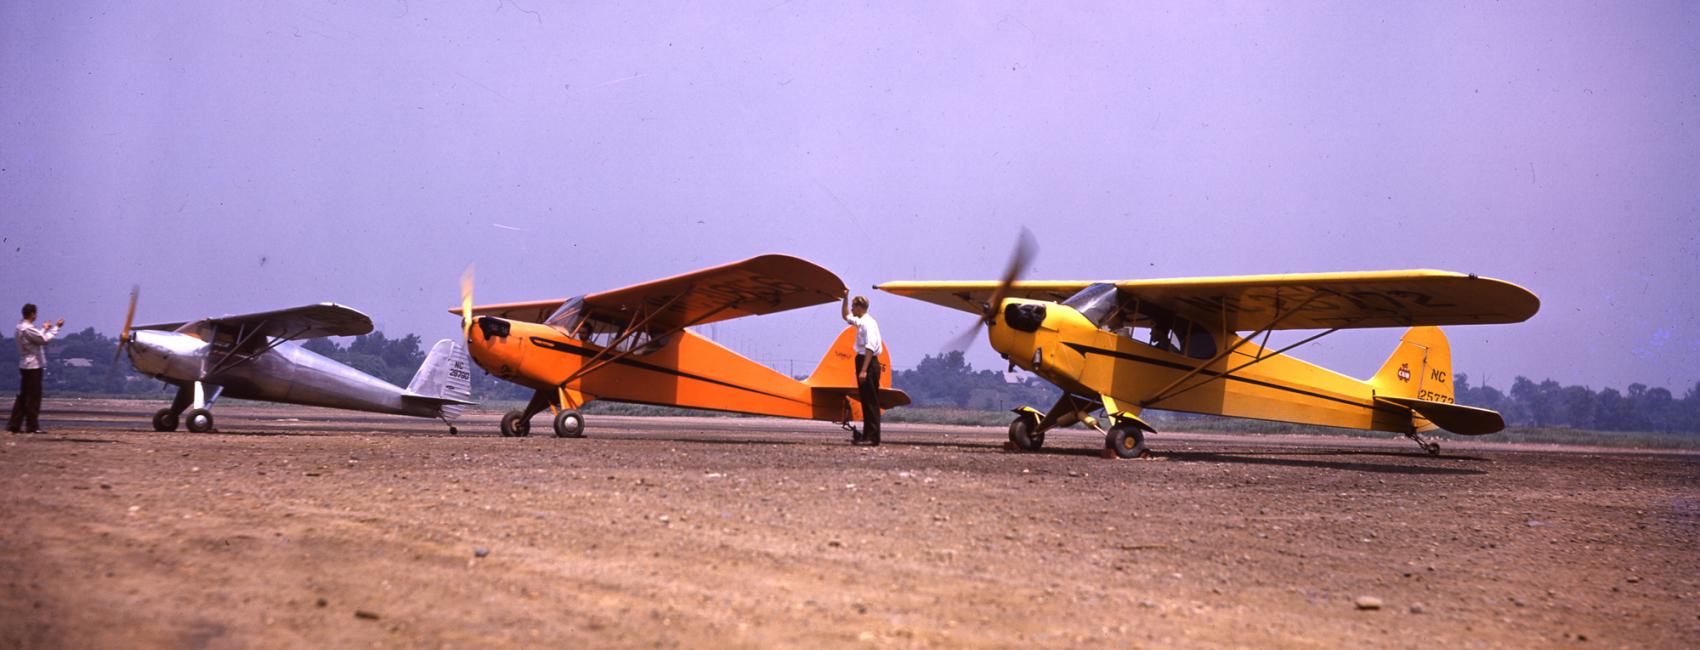 Aeronca L-3 Cuba 1 by Claveworks on DeviantArt